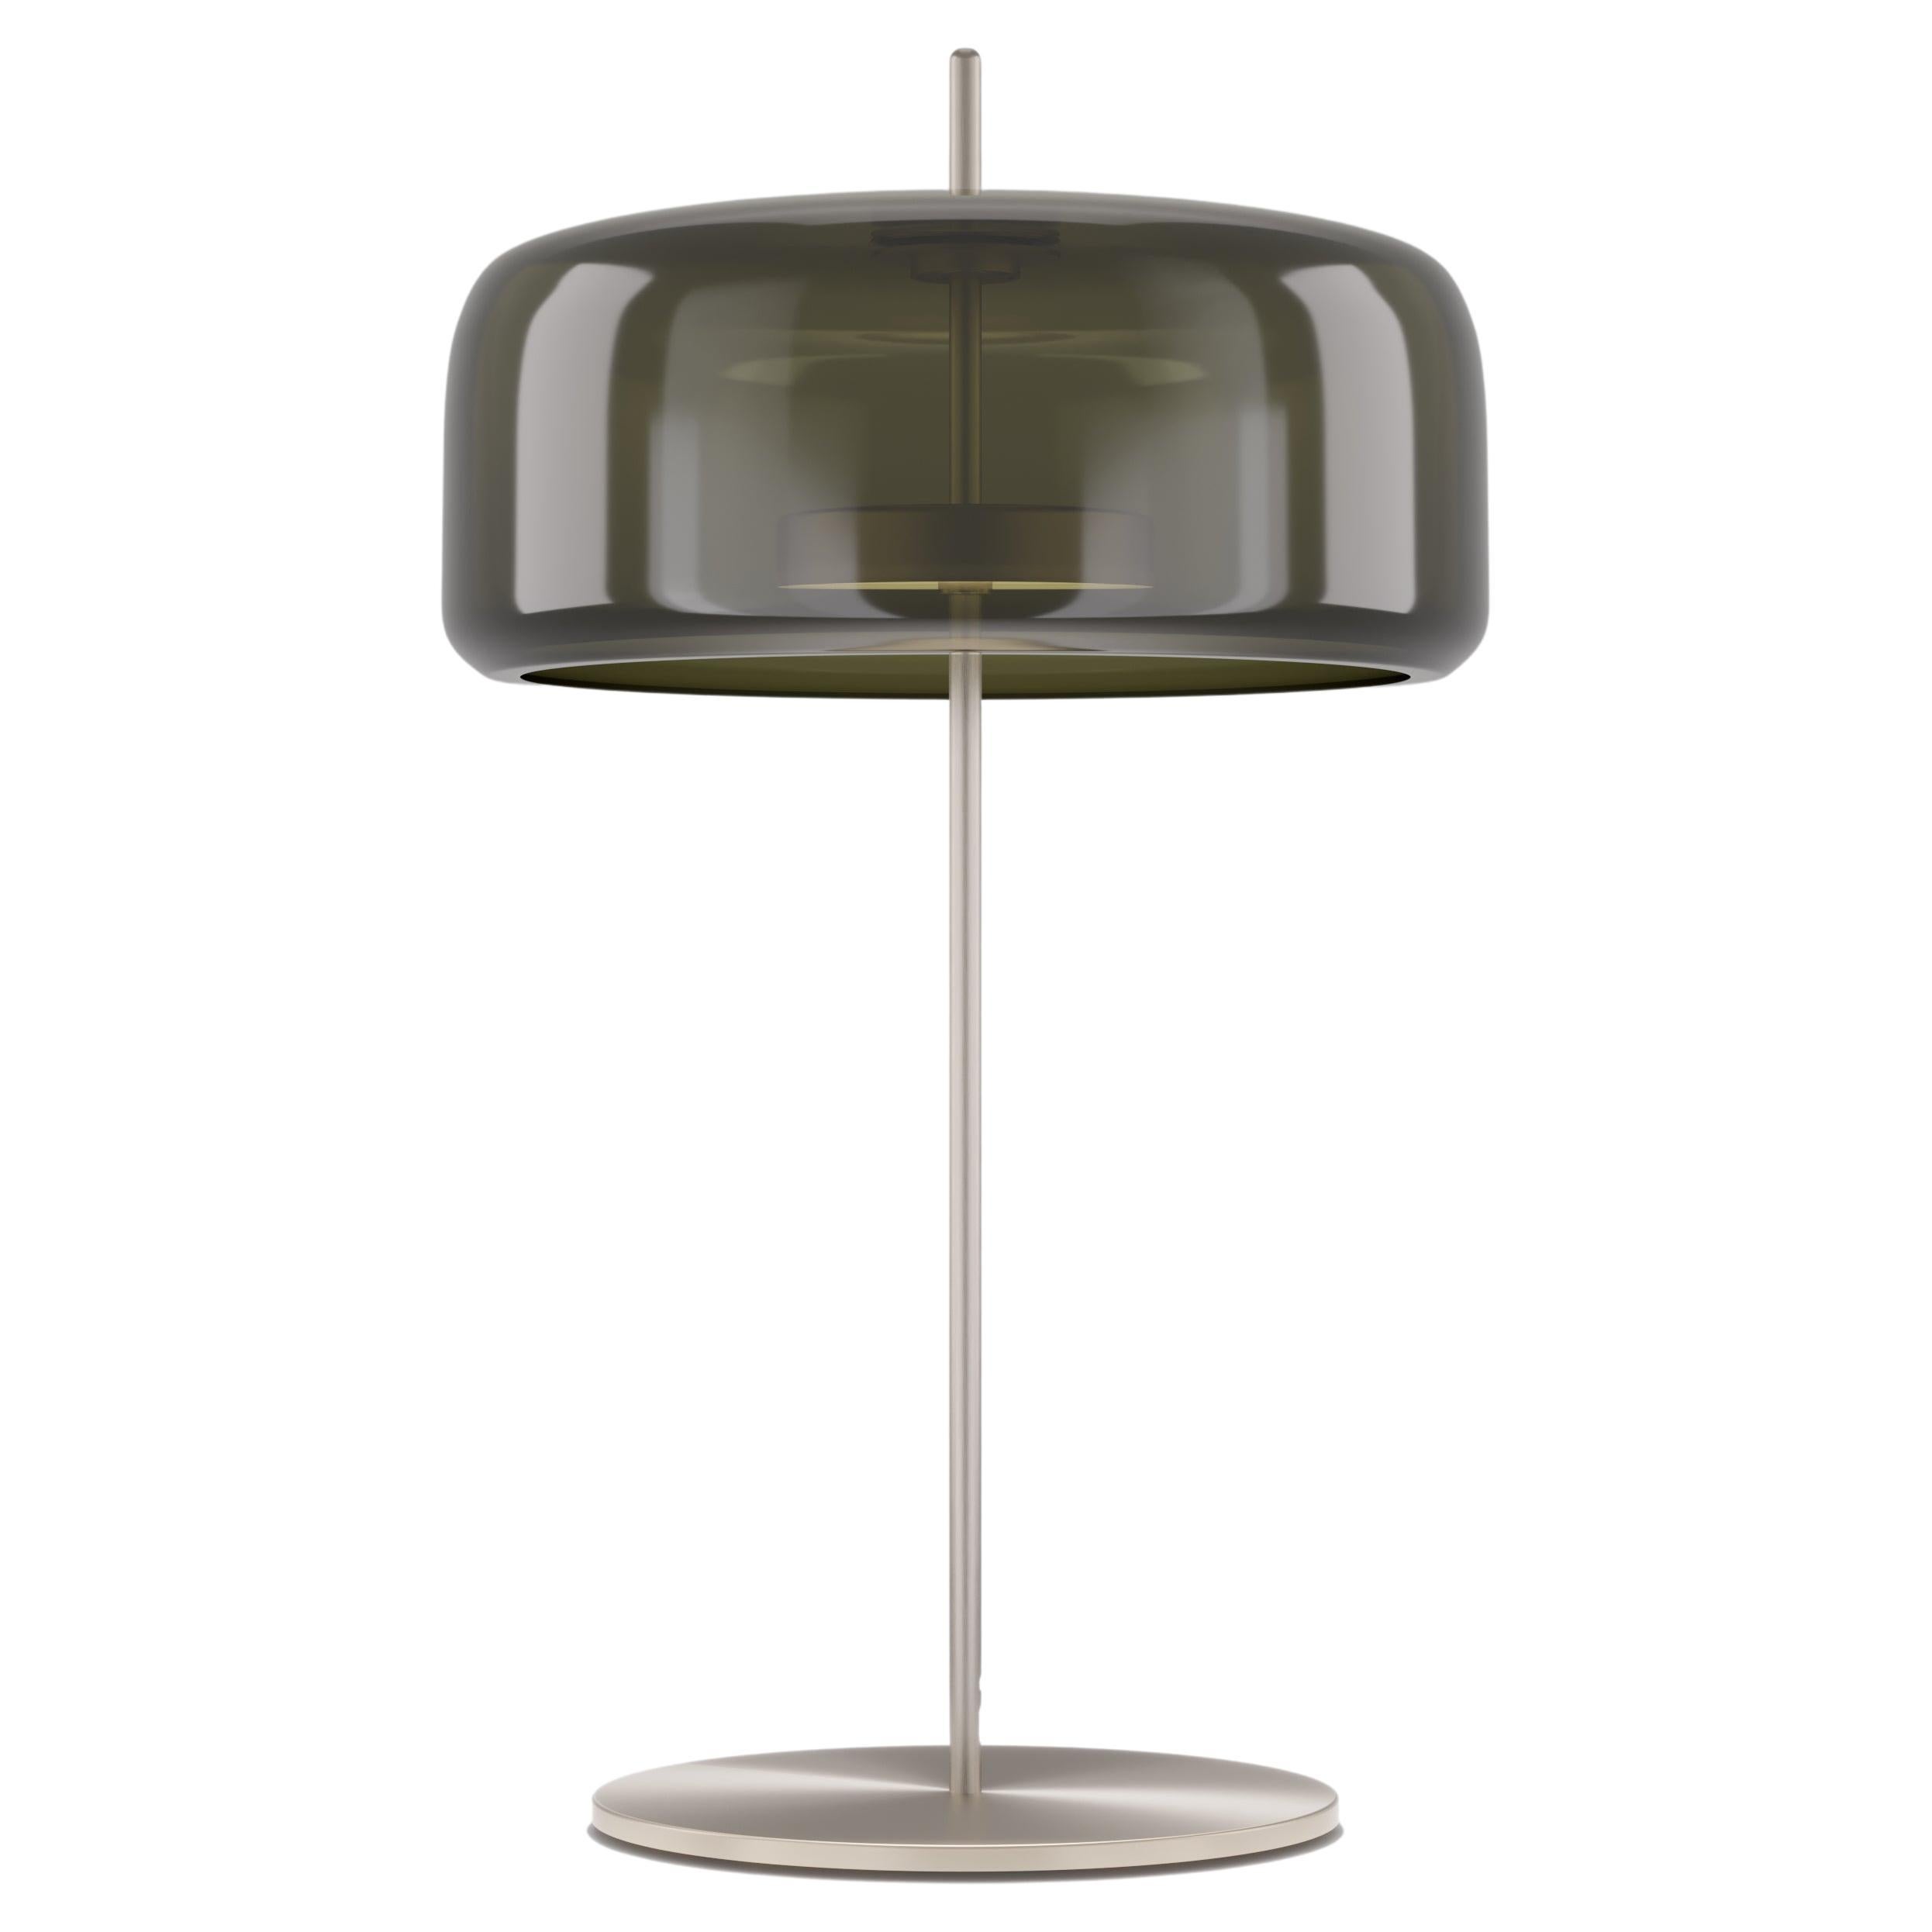 Vistosi Jube Table Lamp in Old Green Transparent Glass And Matt Steel Finish